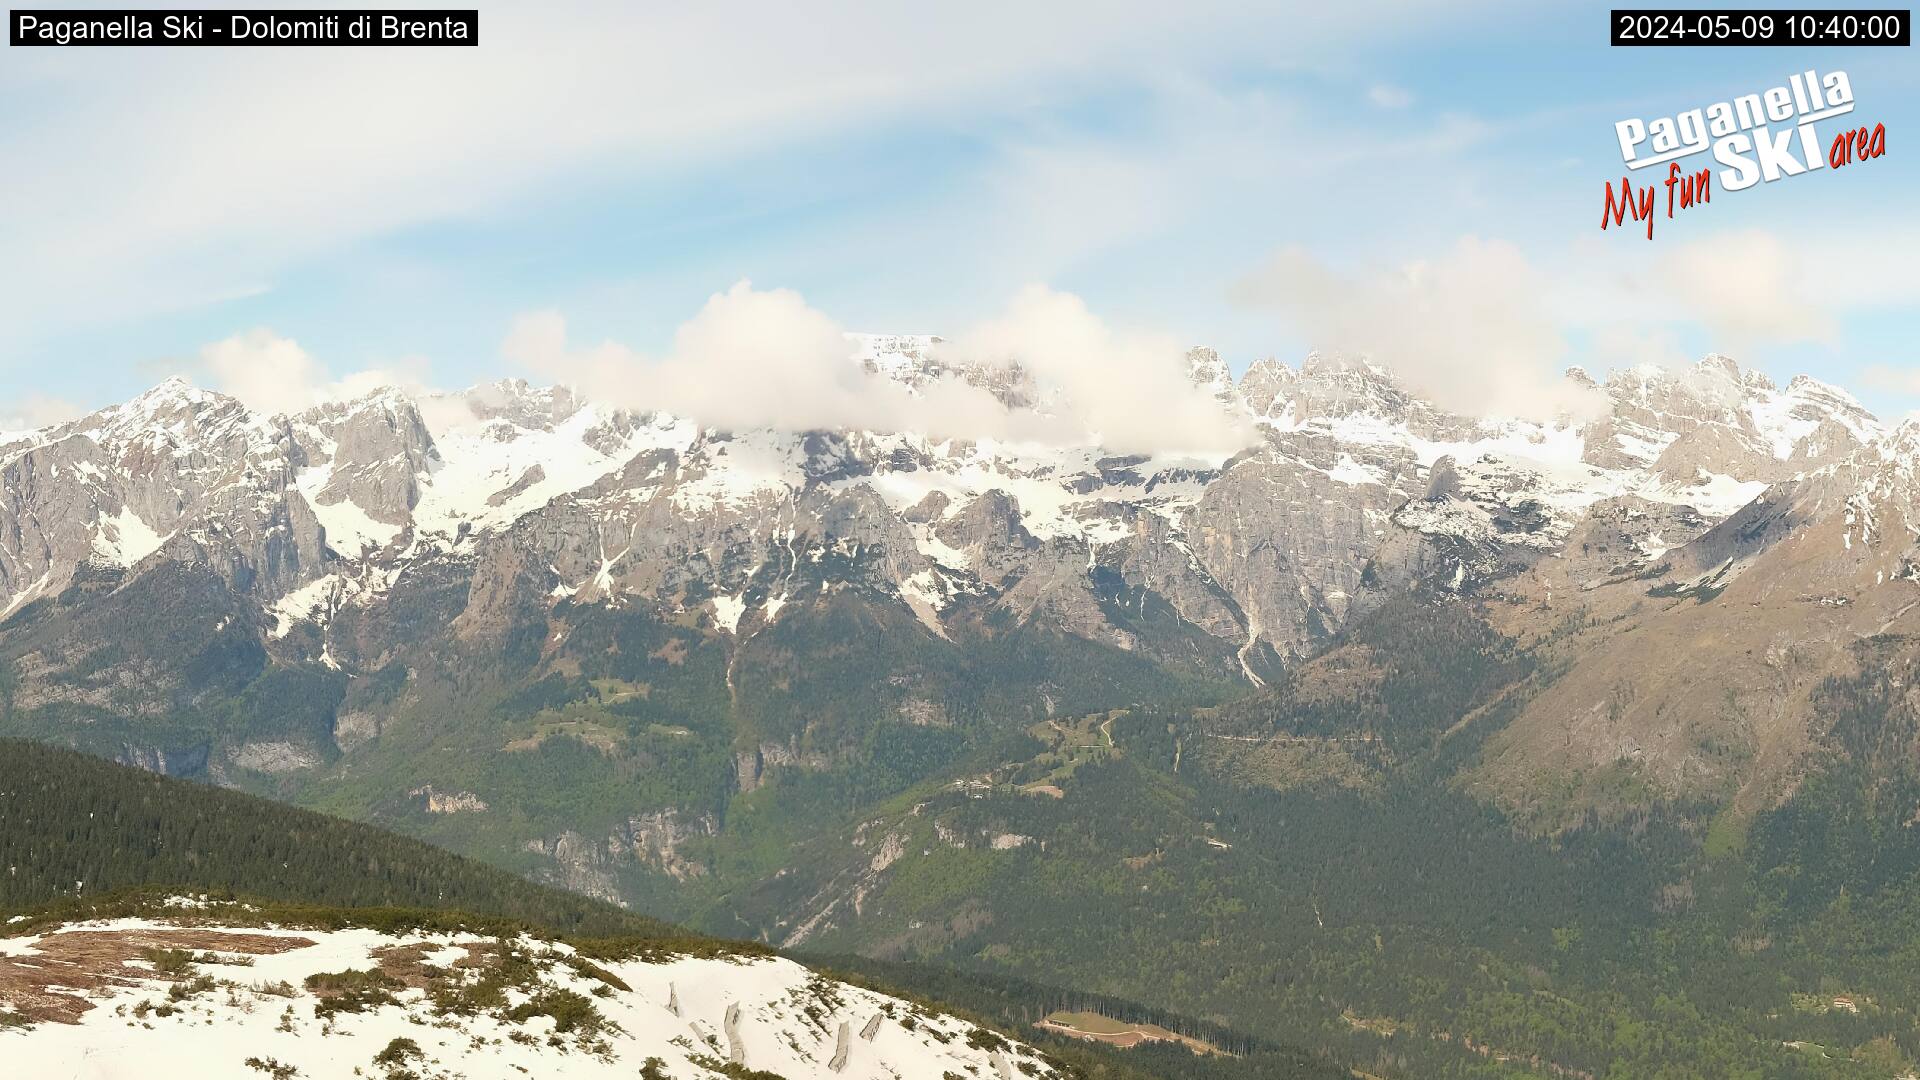 Sicht auf die Dolomiti di Brenta